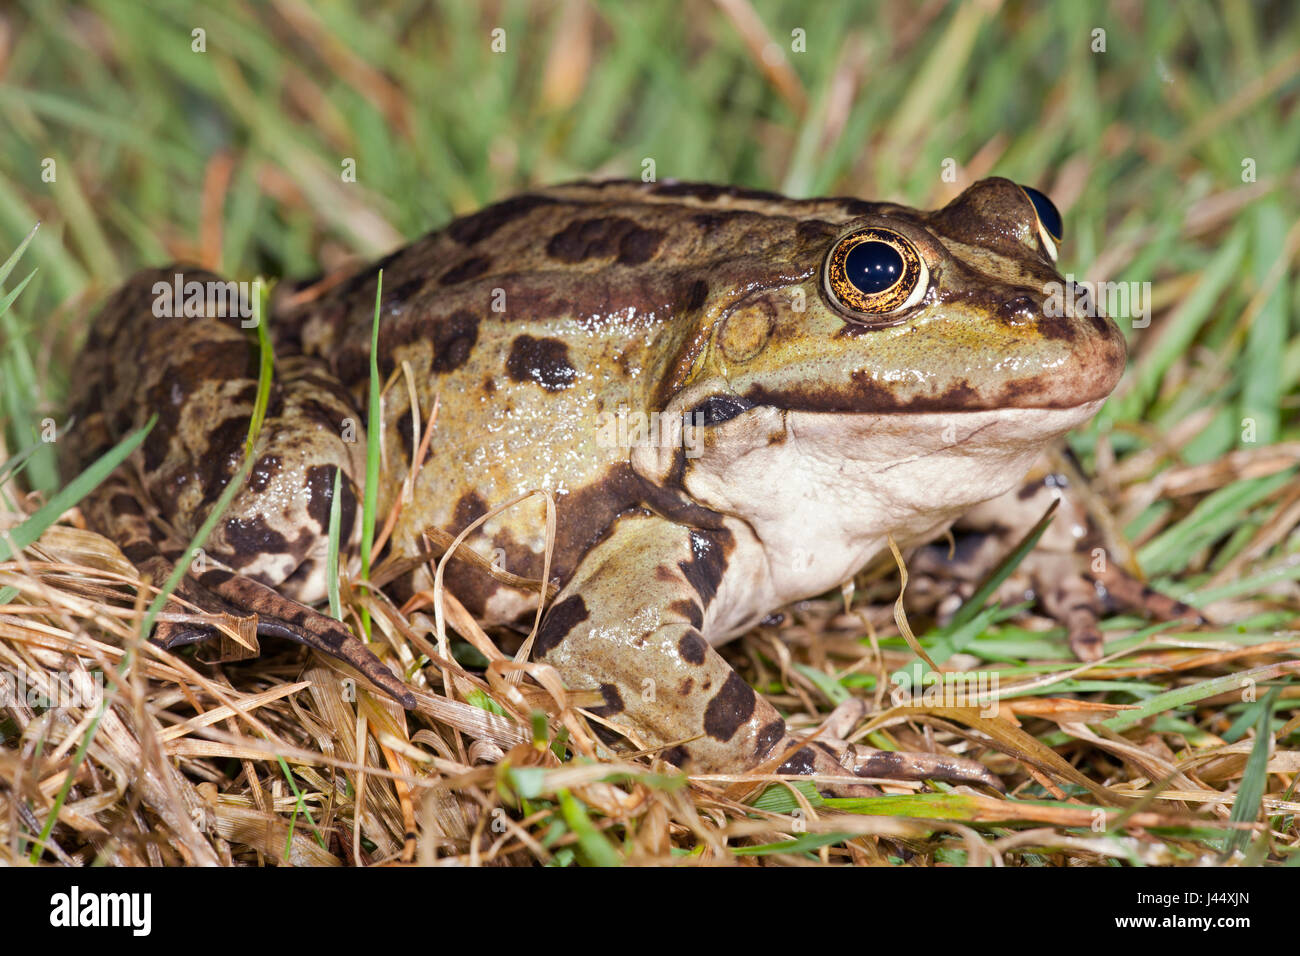 Foto di una grande rana di palude in erba Foto Stock